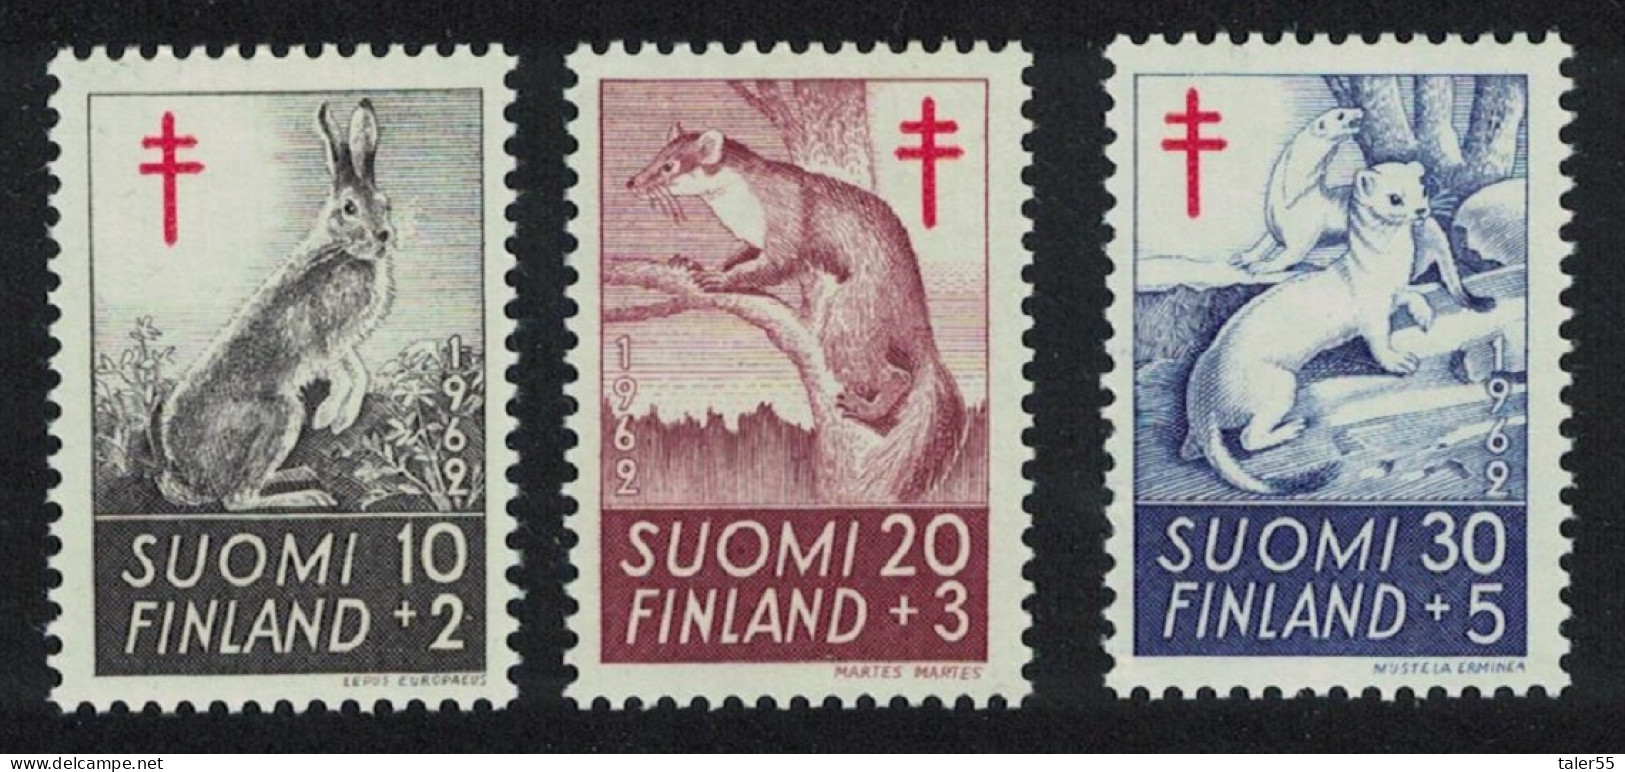 Finland Hare Marten Stoat 3v 1962 MNH SG#642-644 Sc#B163-B165 - Unused Stamps